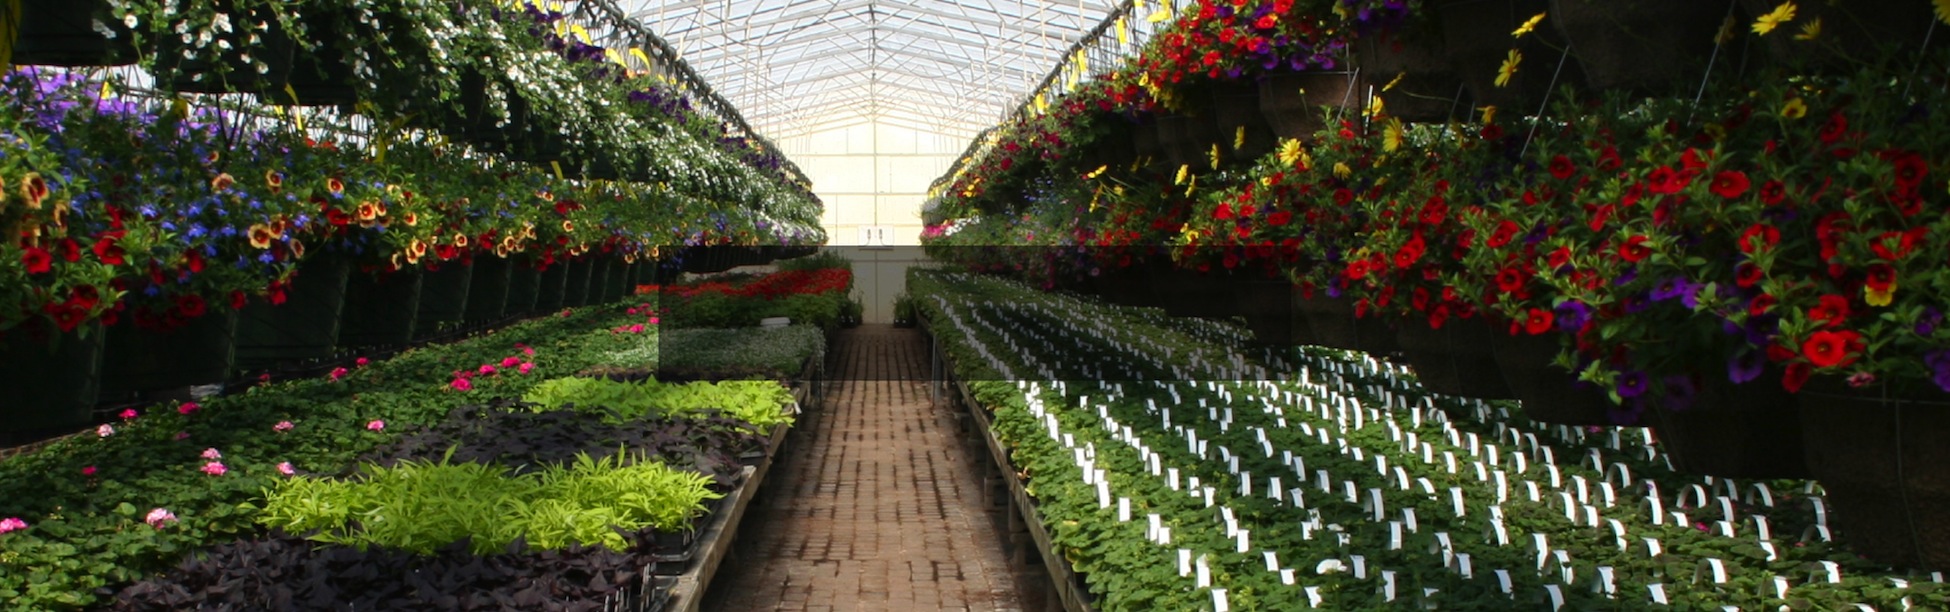 annual greenhouse